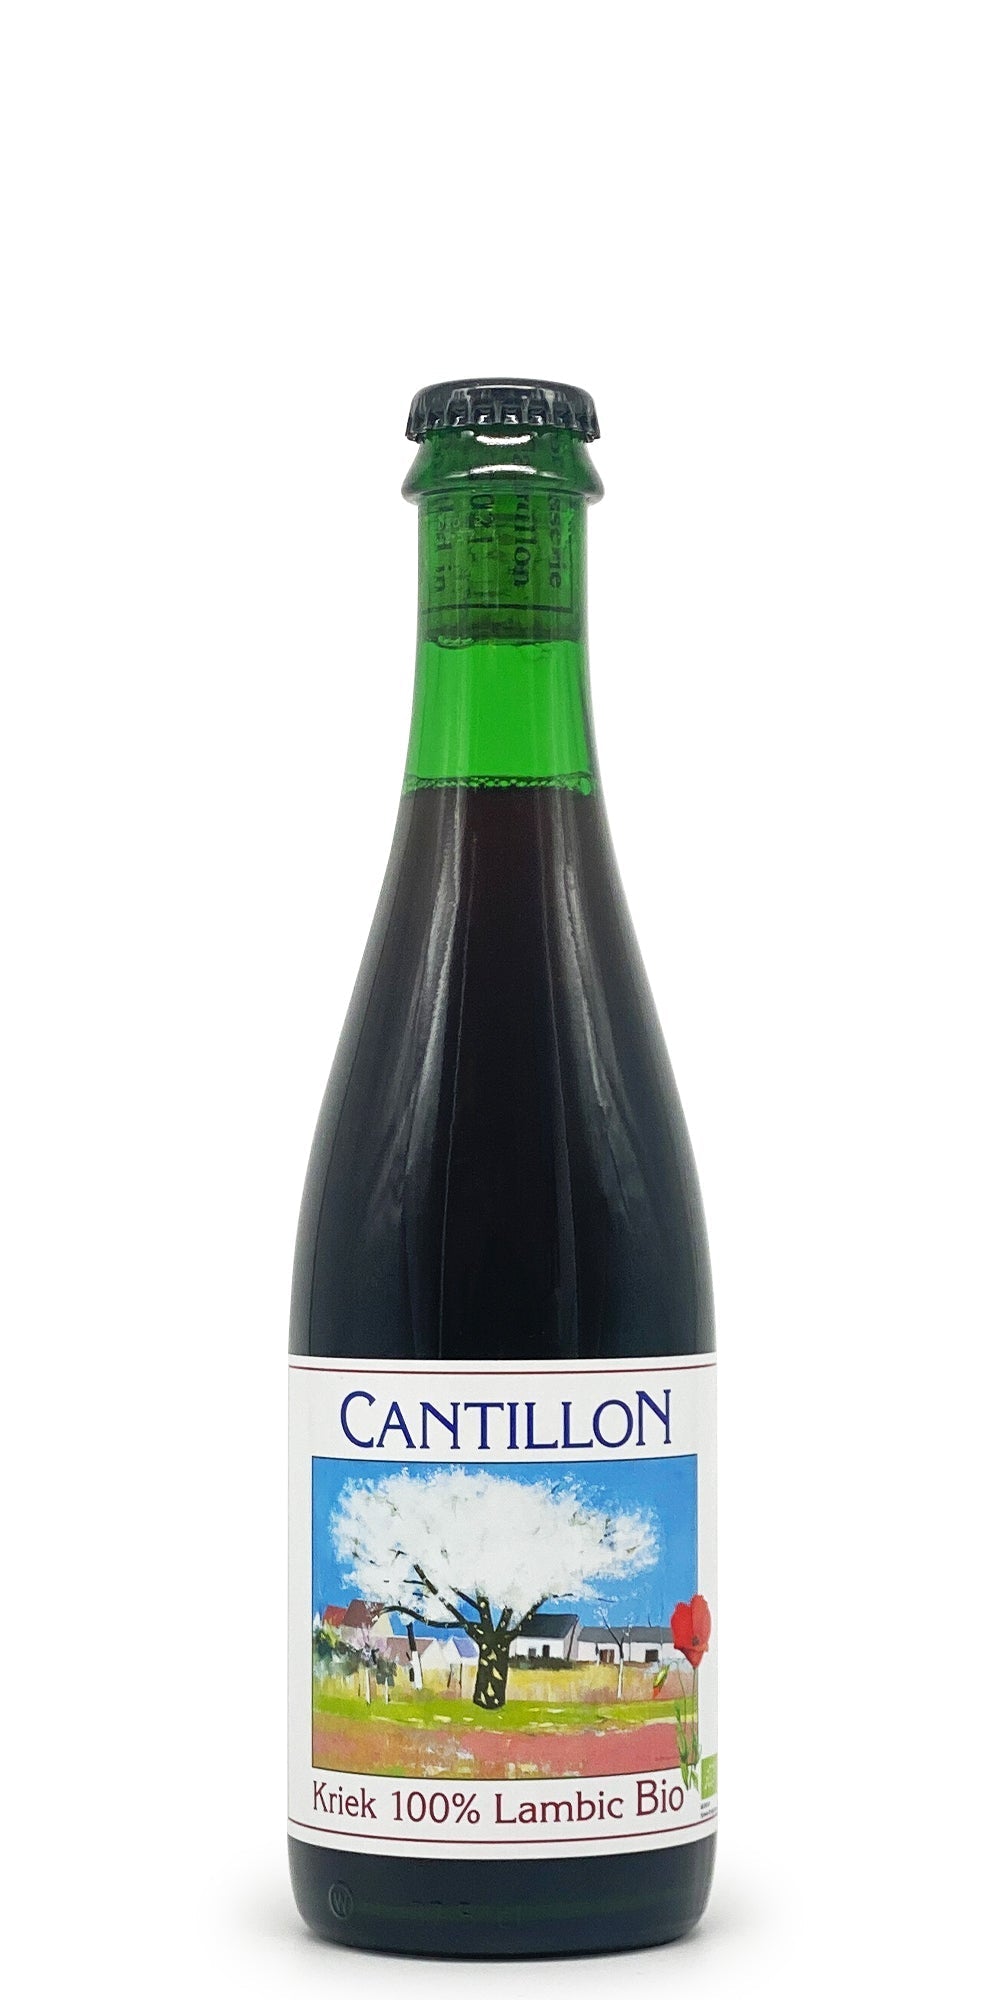 Cantillon - Kriek (2013)